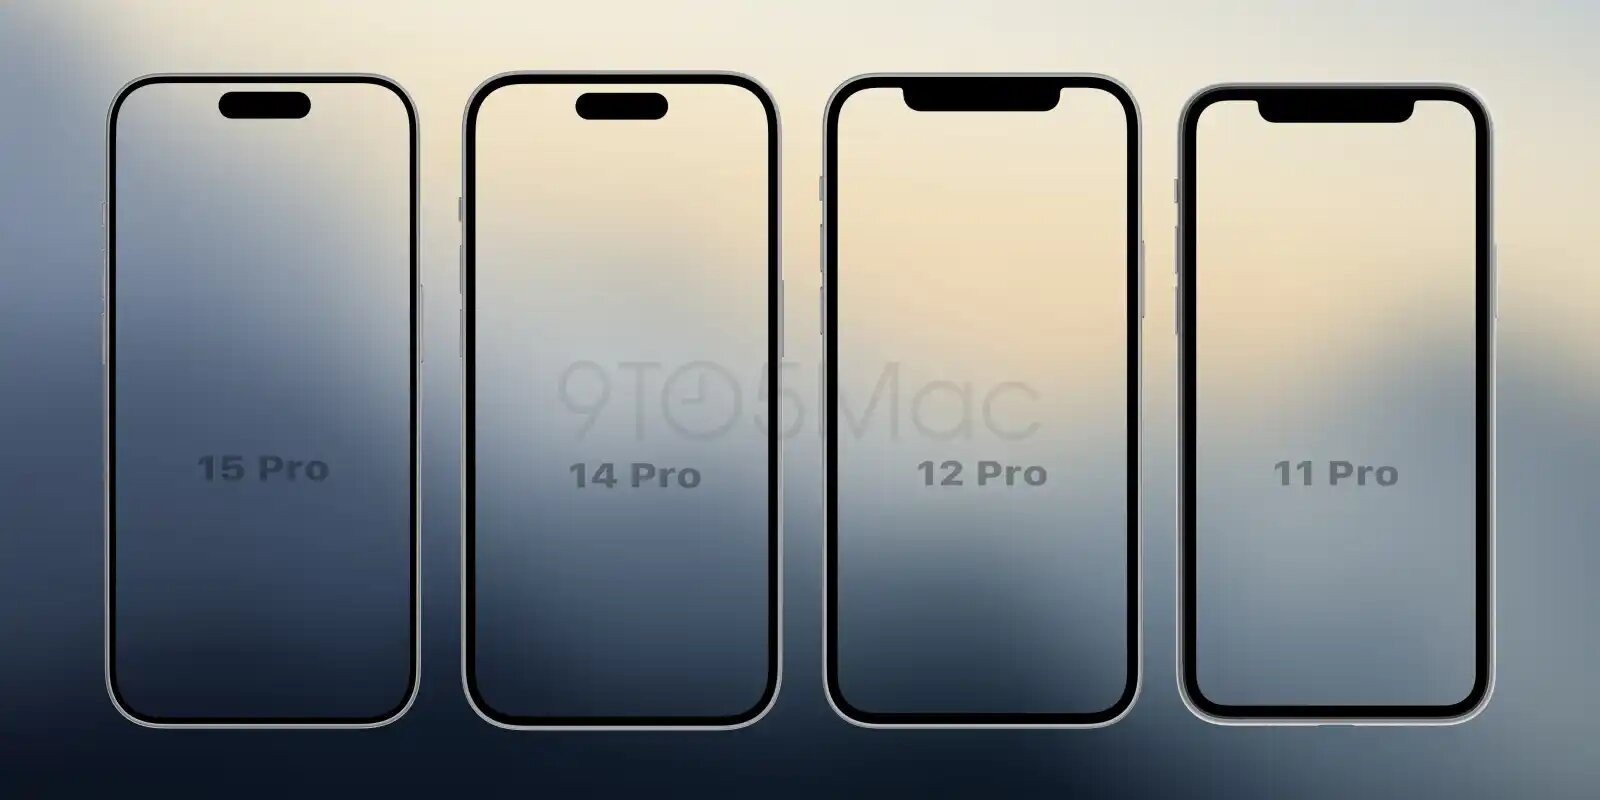 Iphone 15 Pro Max габариты. Рамка iphone 15 Pro Max. Iphone 15 Pro Max диагональ экрана. Iphone 15 vs 15 Pro. Сравнение 11 про и 14 про